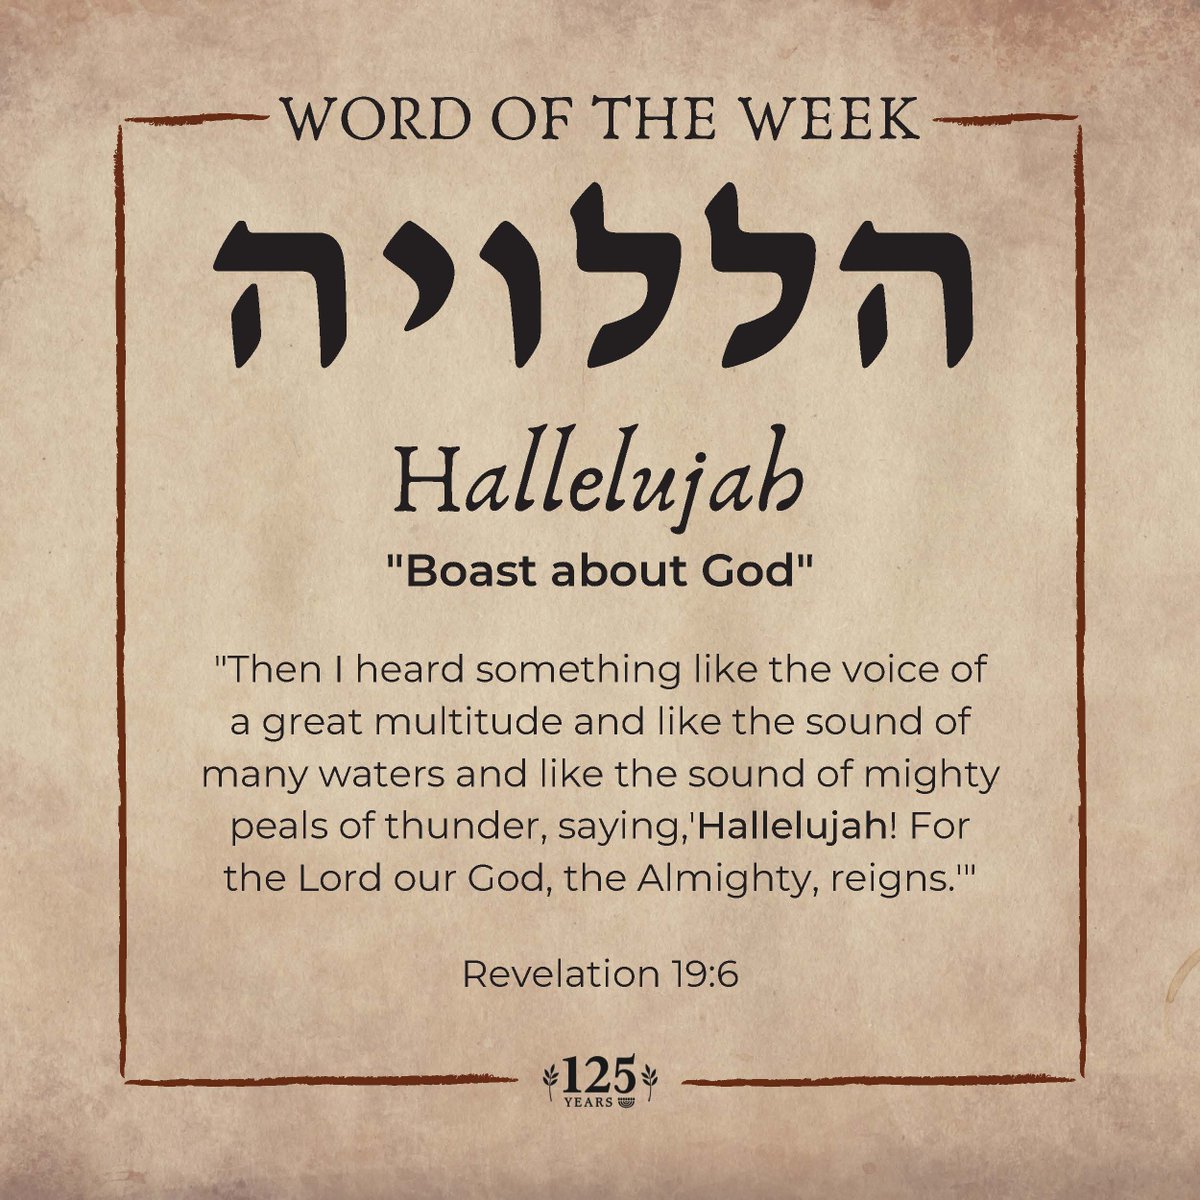 Hva betyr Hallelujah i Bibelen?